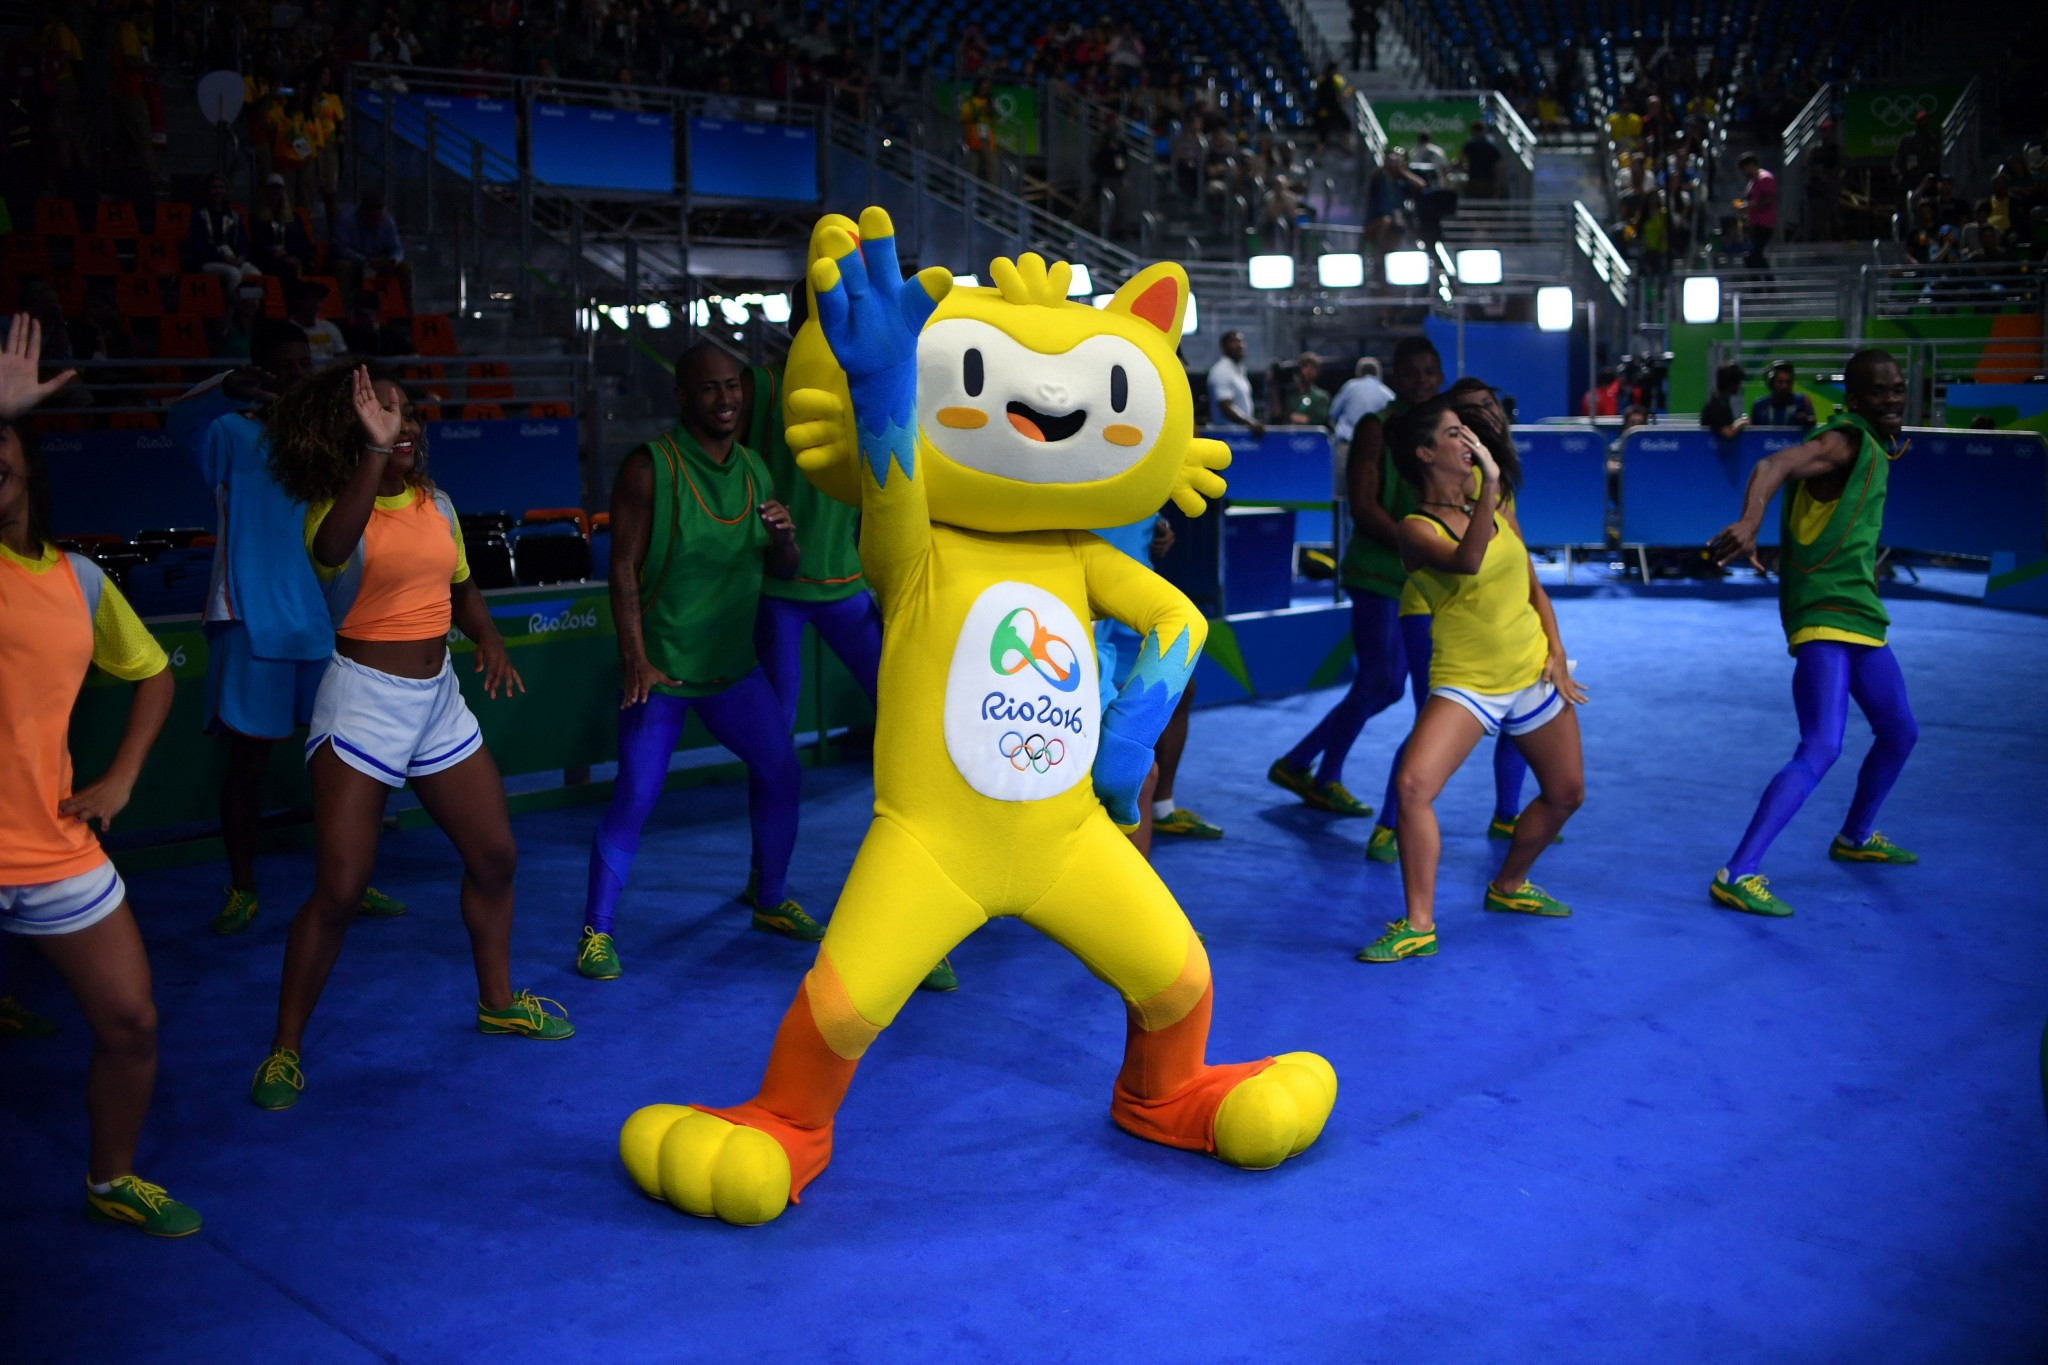 2016 Olympics, Paralympics mascots named Vinicius, Tom